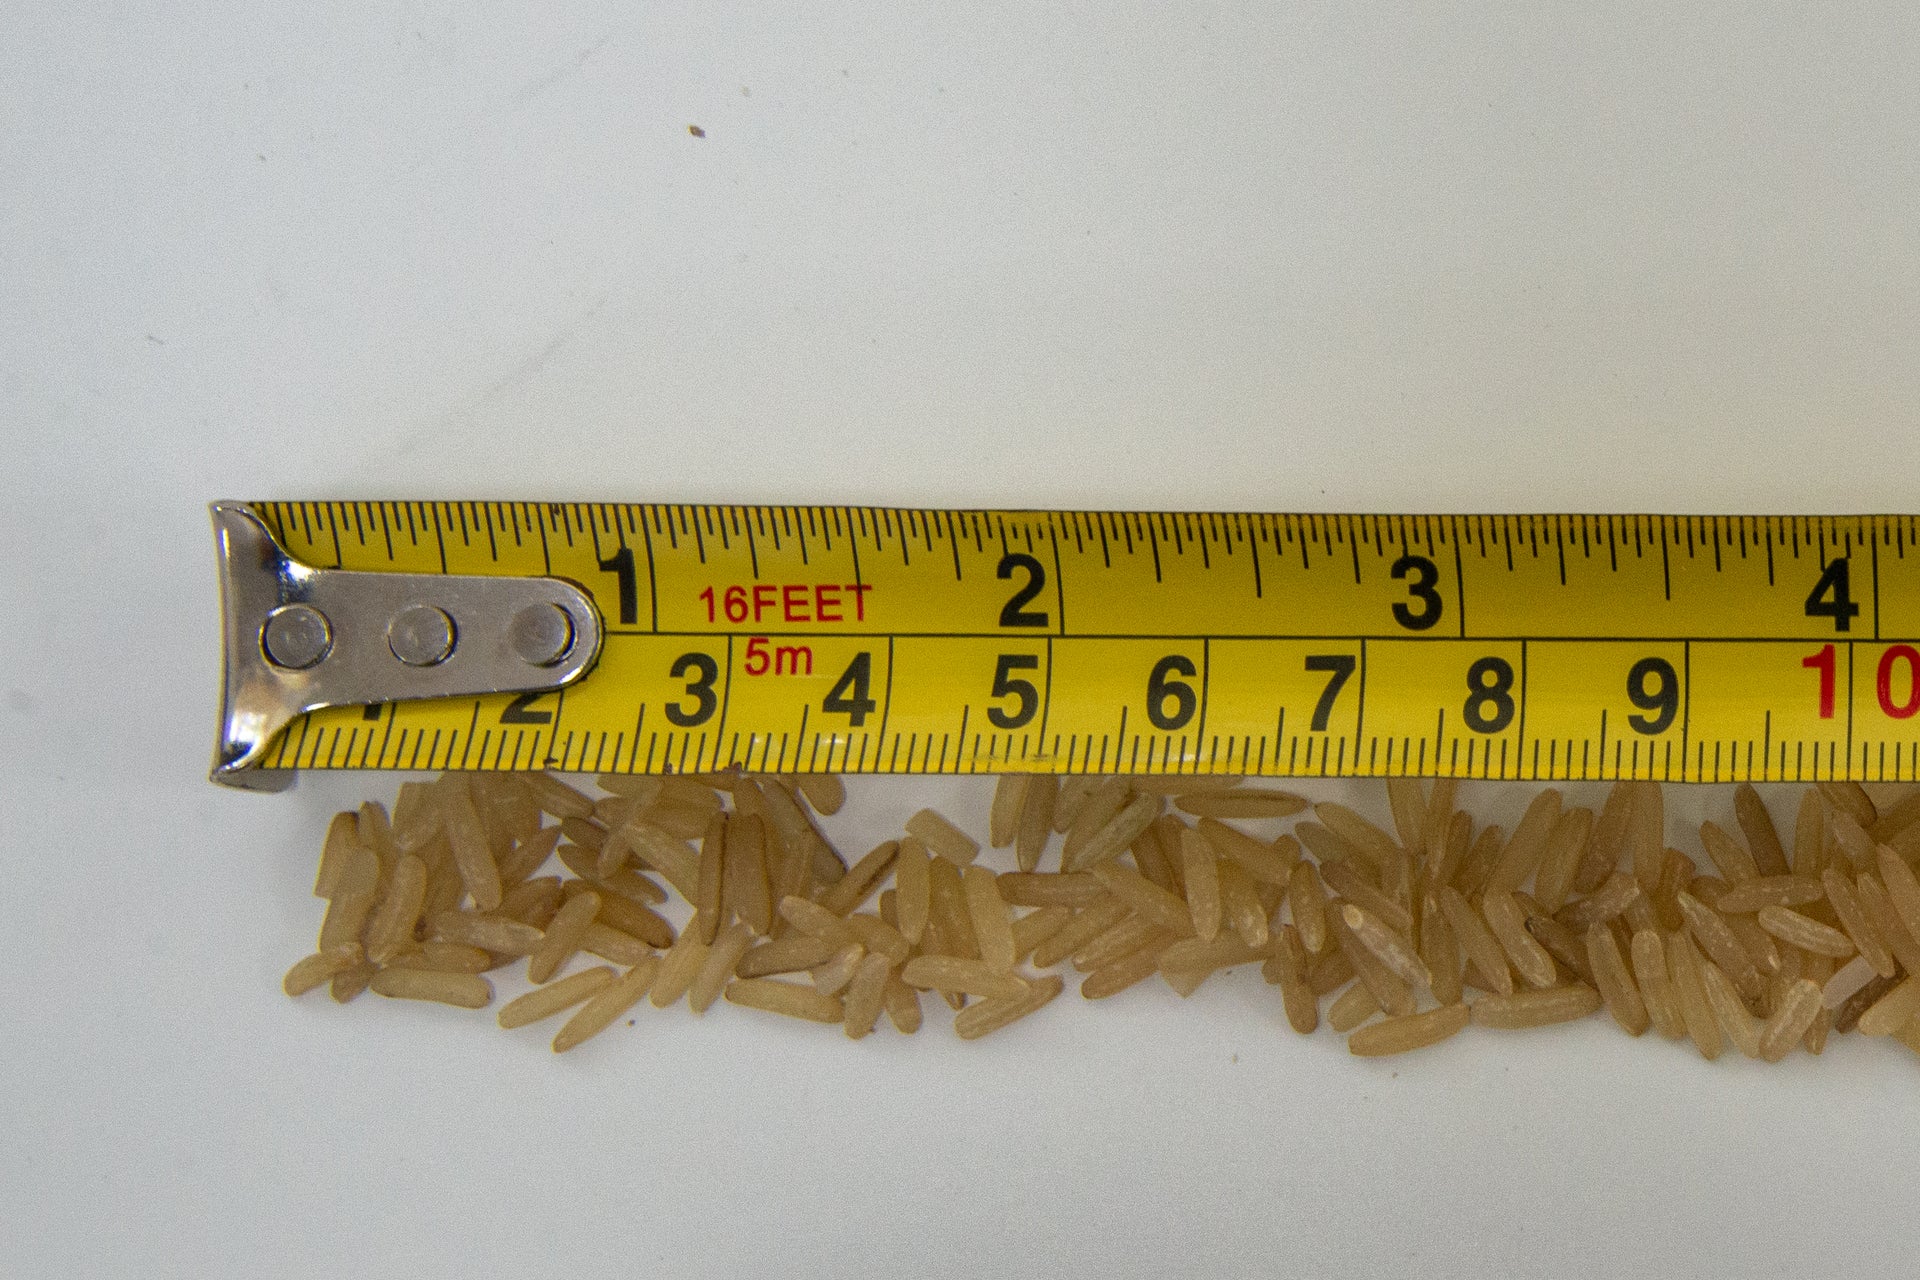 Dyson Gen5detect rice suction test start